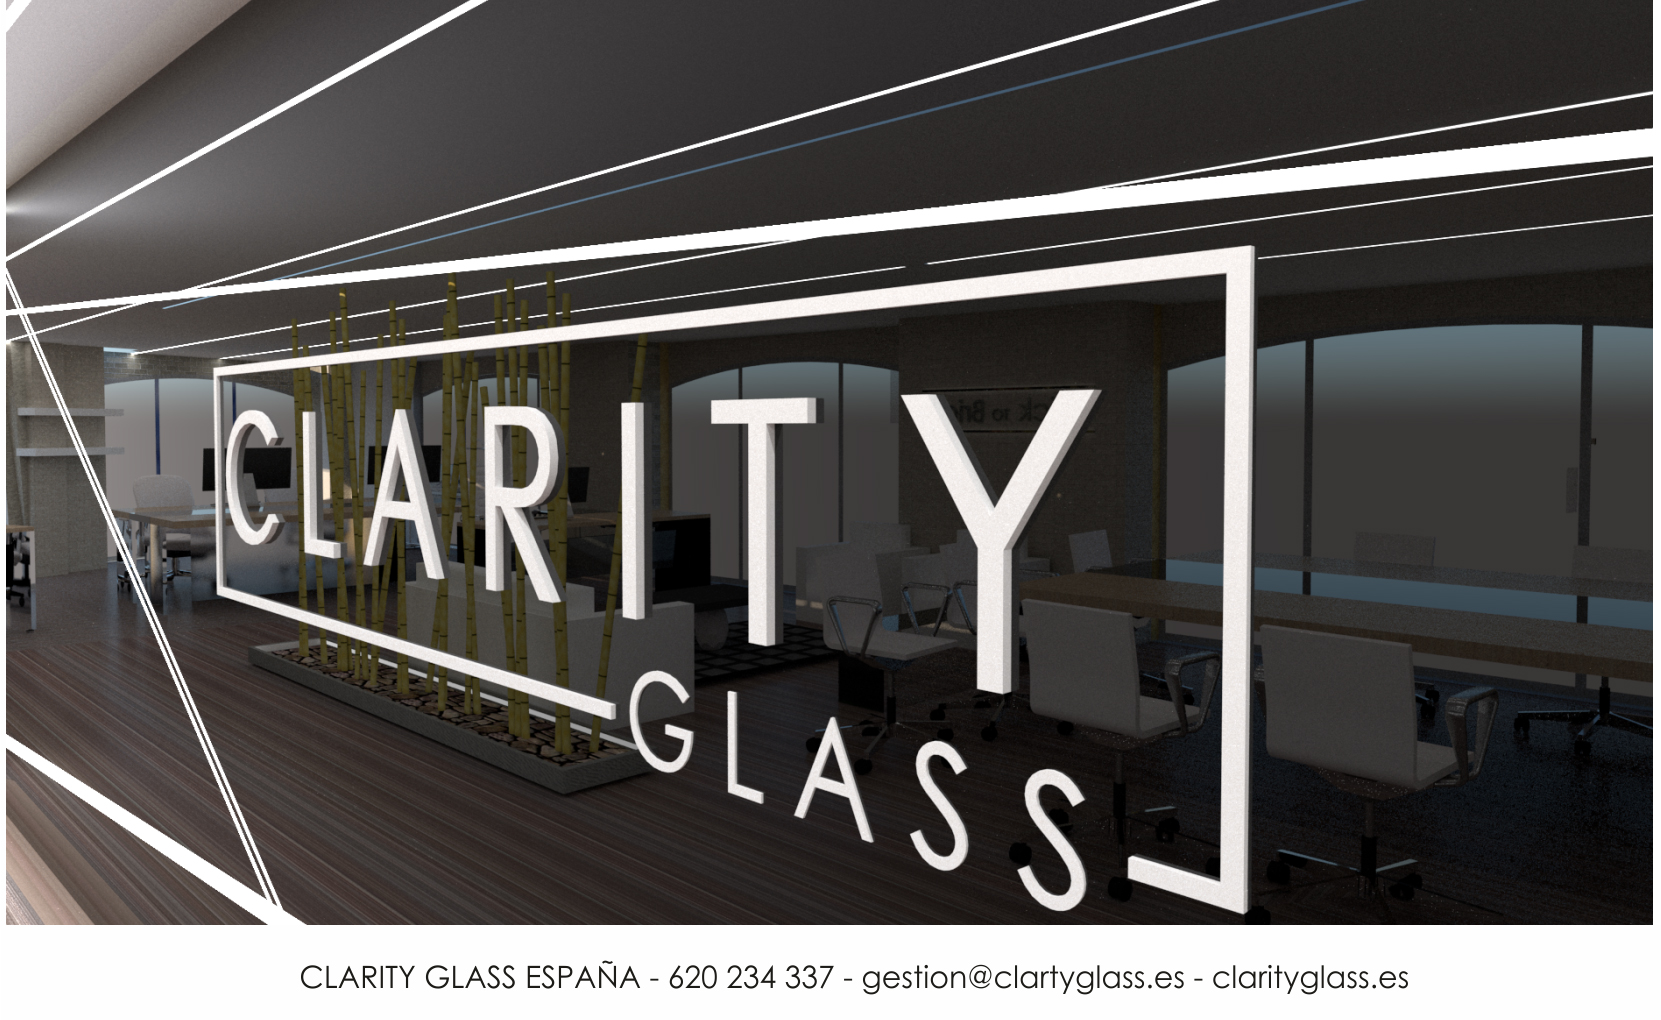 Clarity Glass